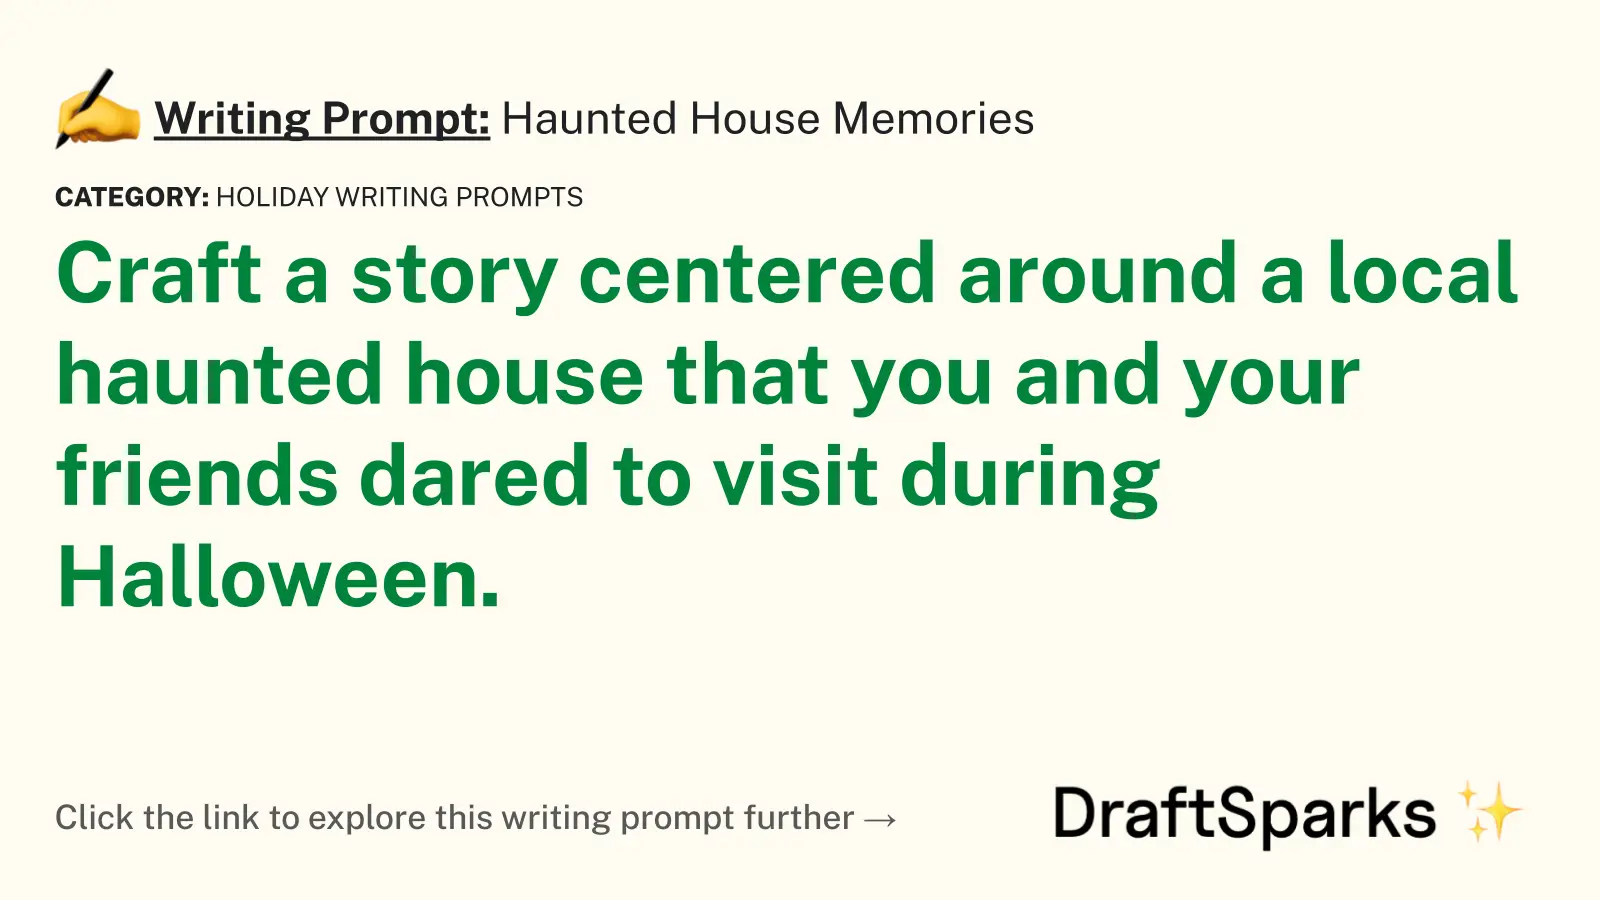 Haunted House Memories